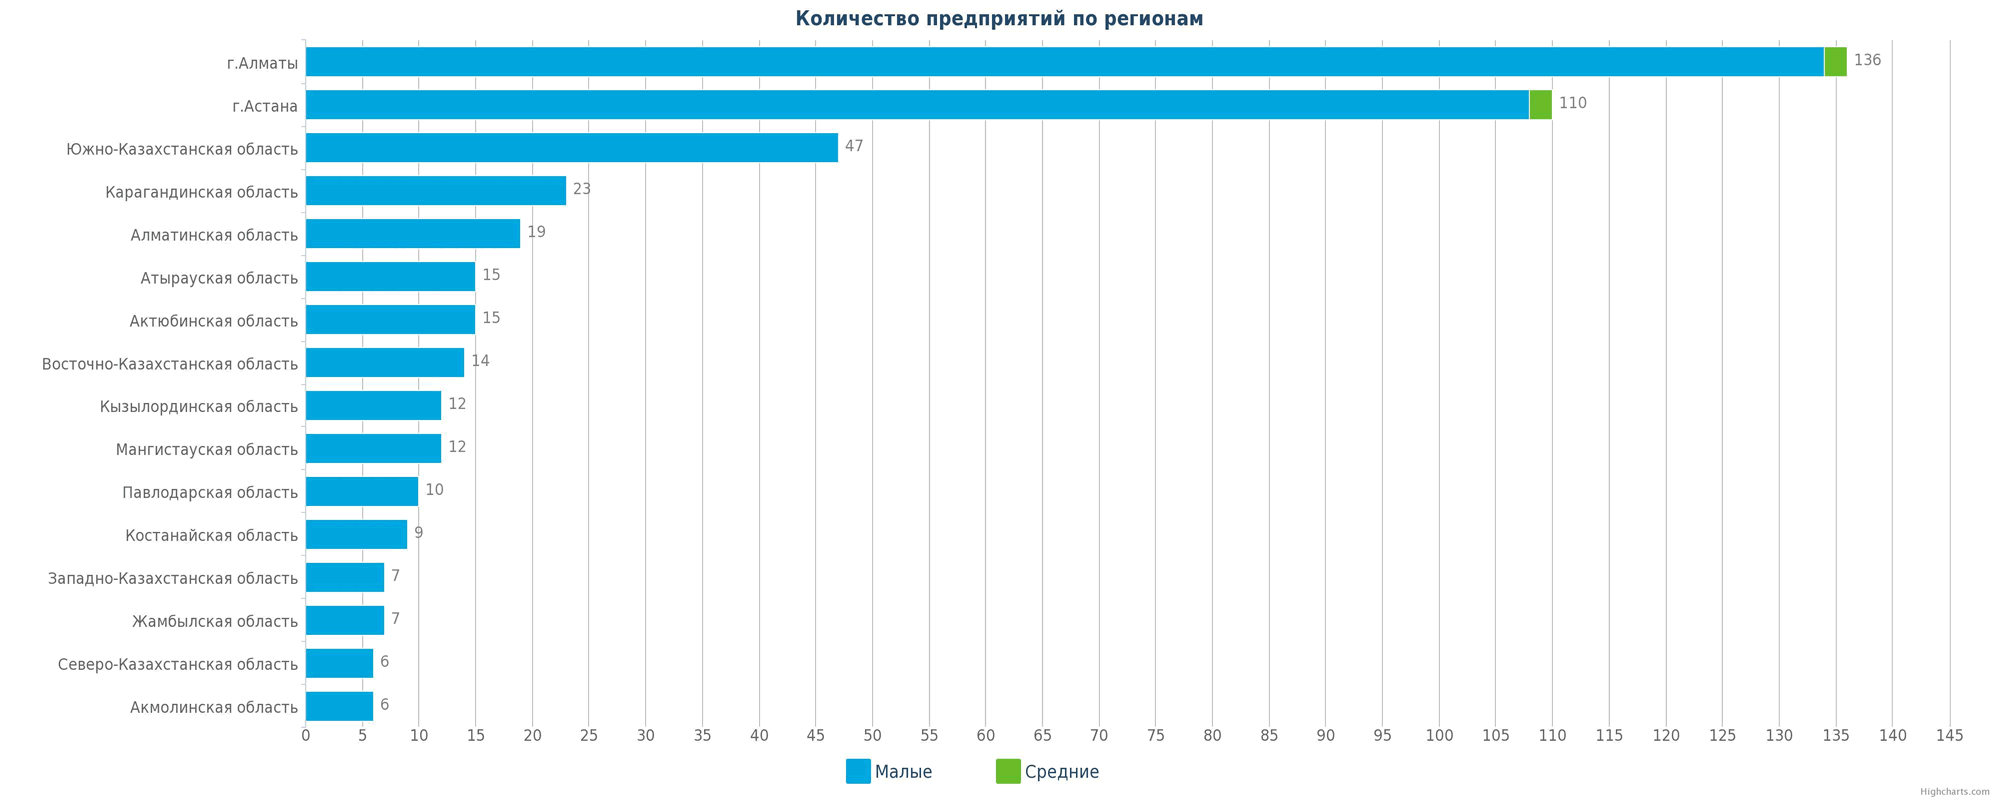 Количество новых предприятий в базе по регионам Казахстана